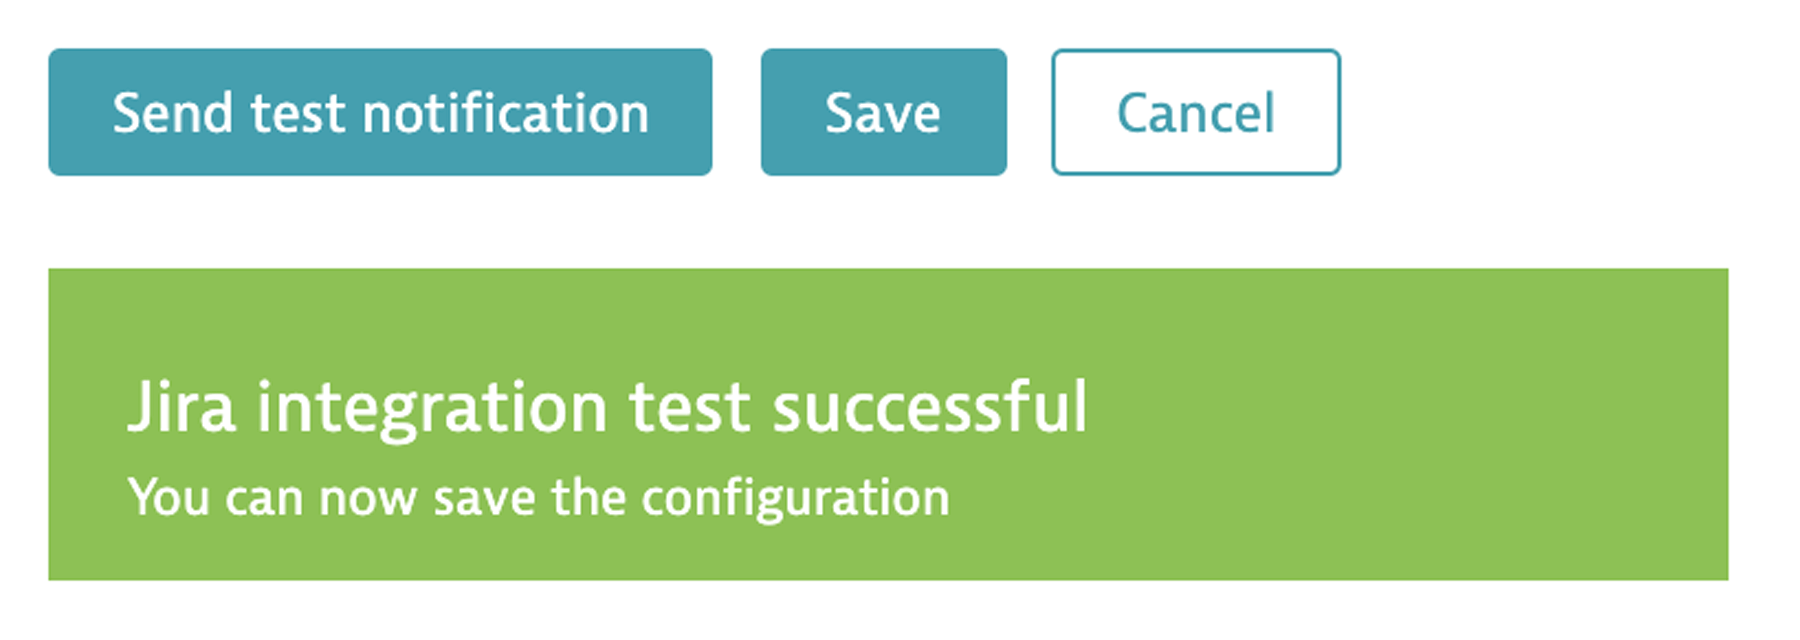 Сообщение Jira integration test successful (Тестирование интеграции с Jira прошло успешно)